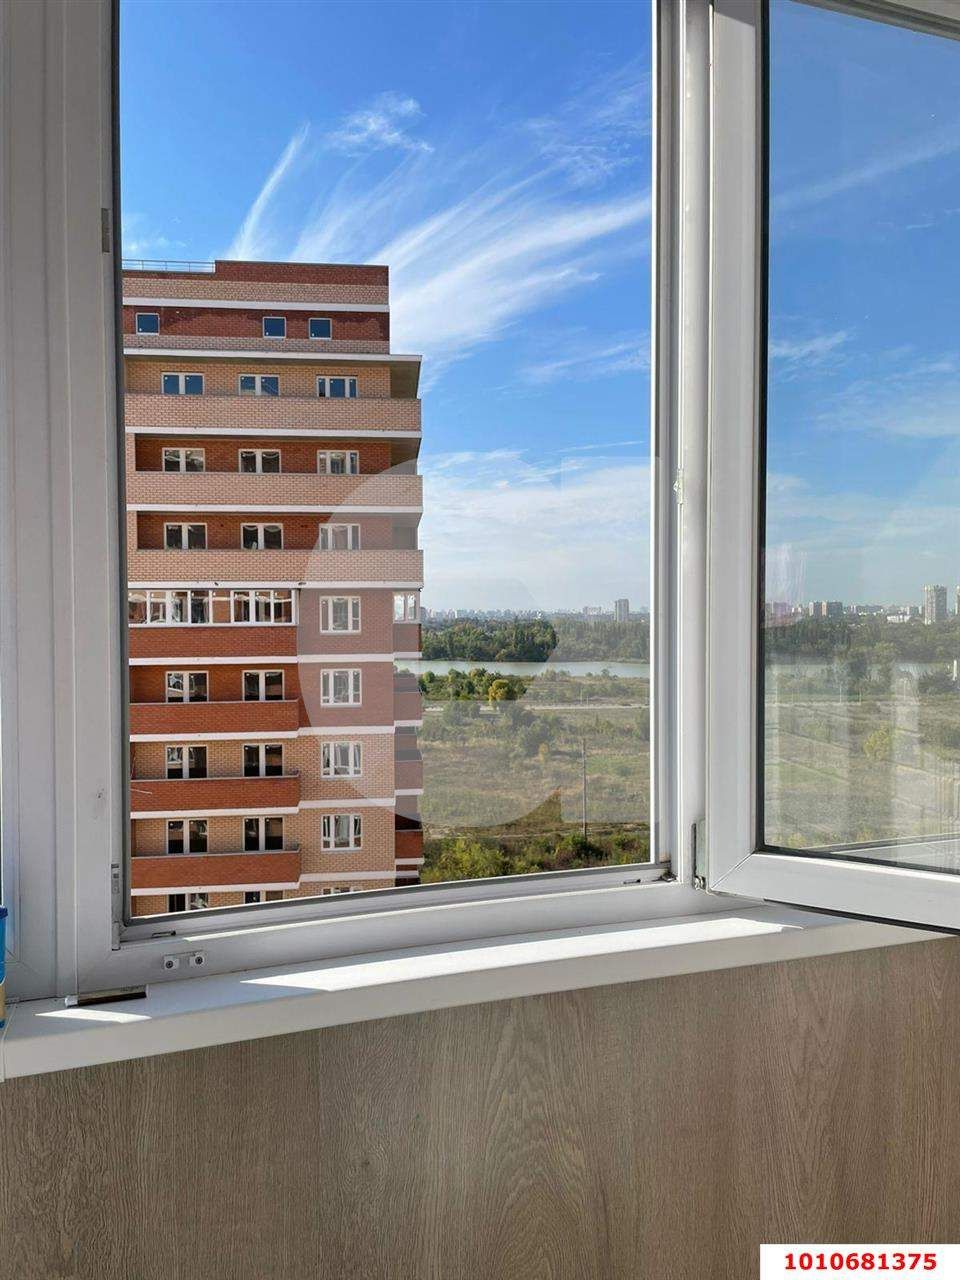 Продается 2-комн. квартира 55.7 кв.м. в Краснодаре, цена: 7 700 000₽ объявление №279812 от 09.02.2022 | Продажа квартиры в Краснодаре | Авеланго